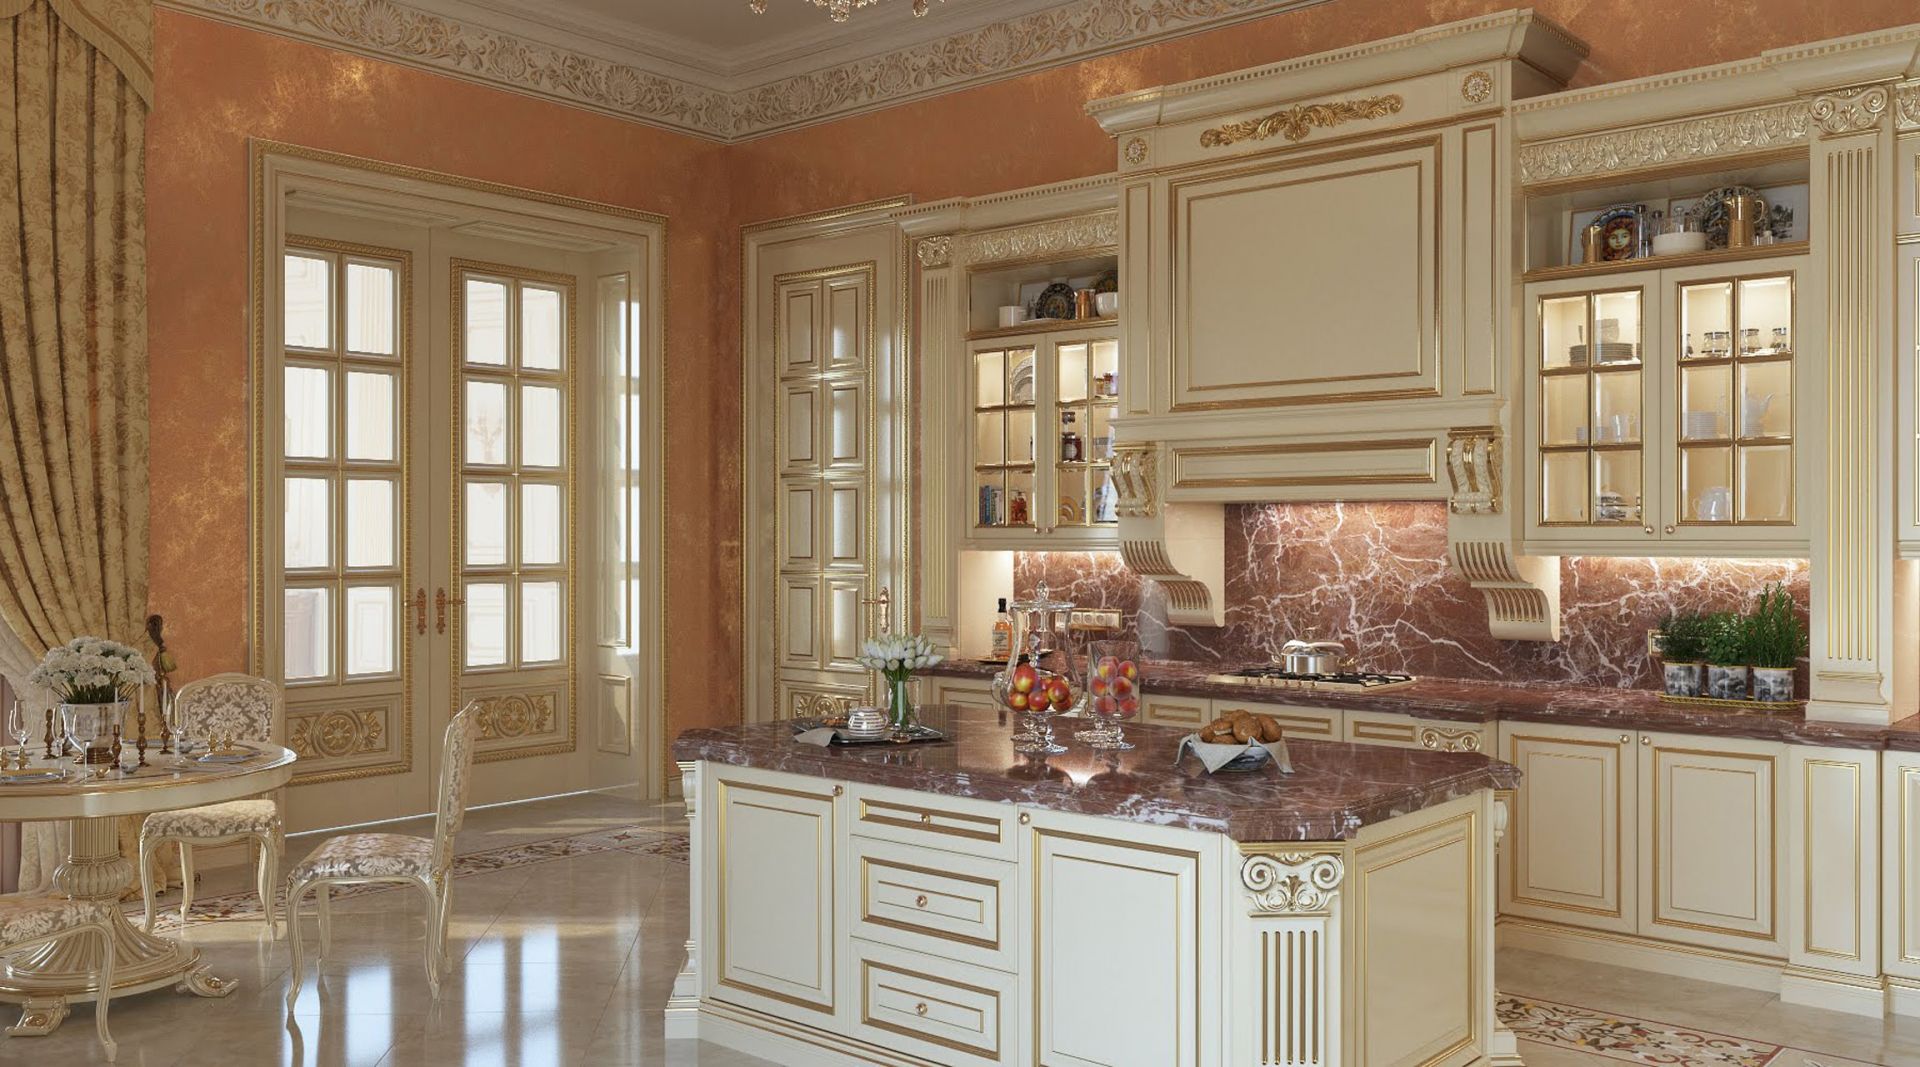 Stone, Luxurious classic kitchen interior